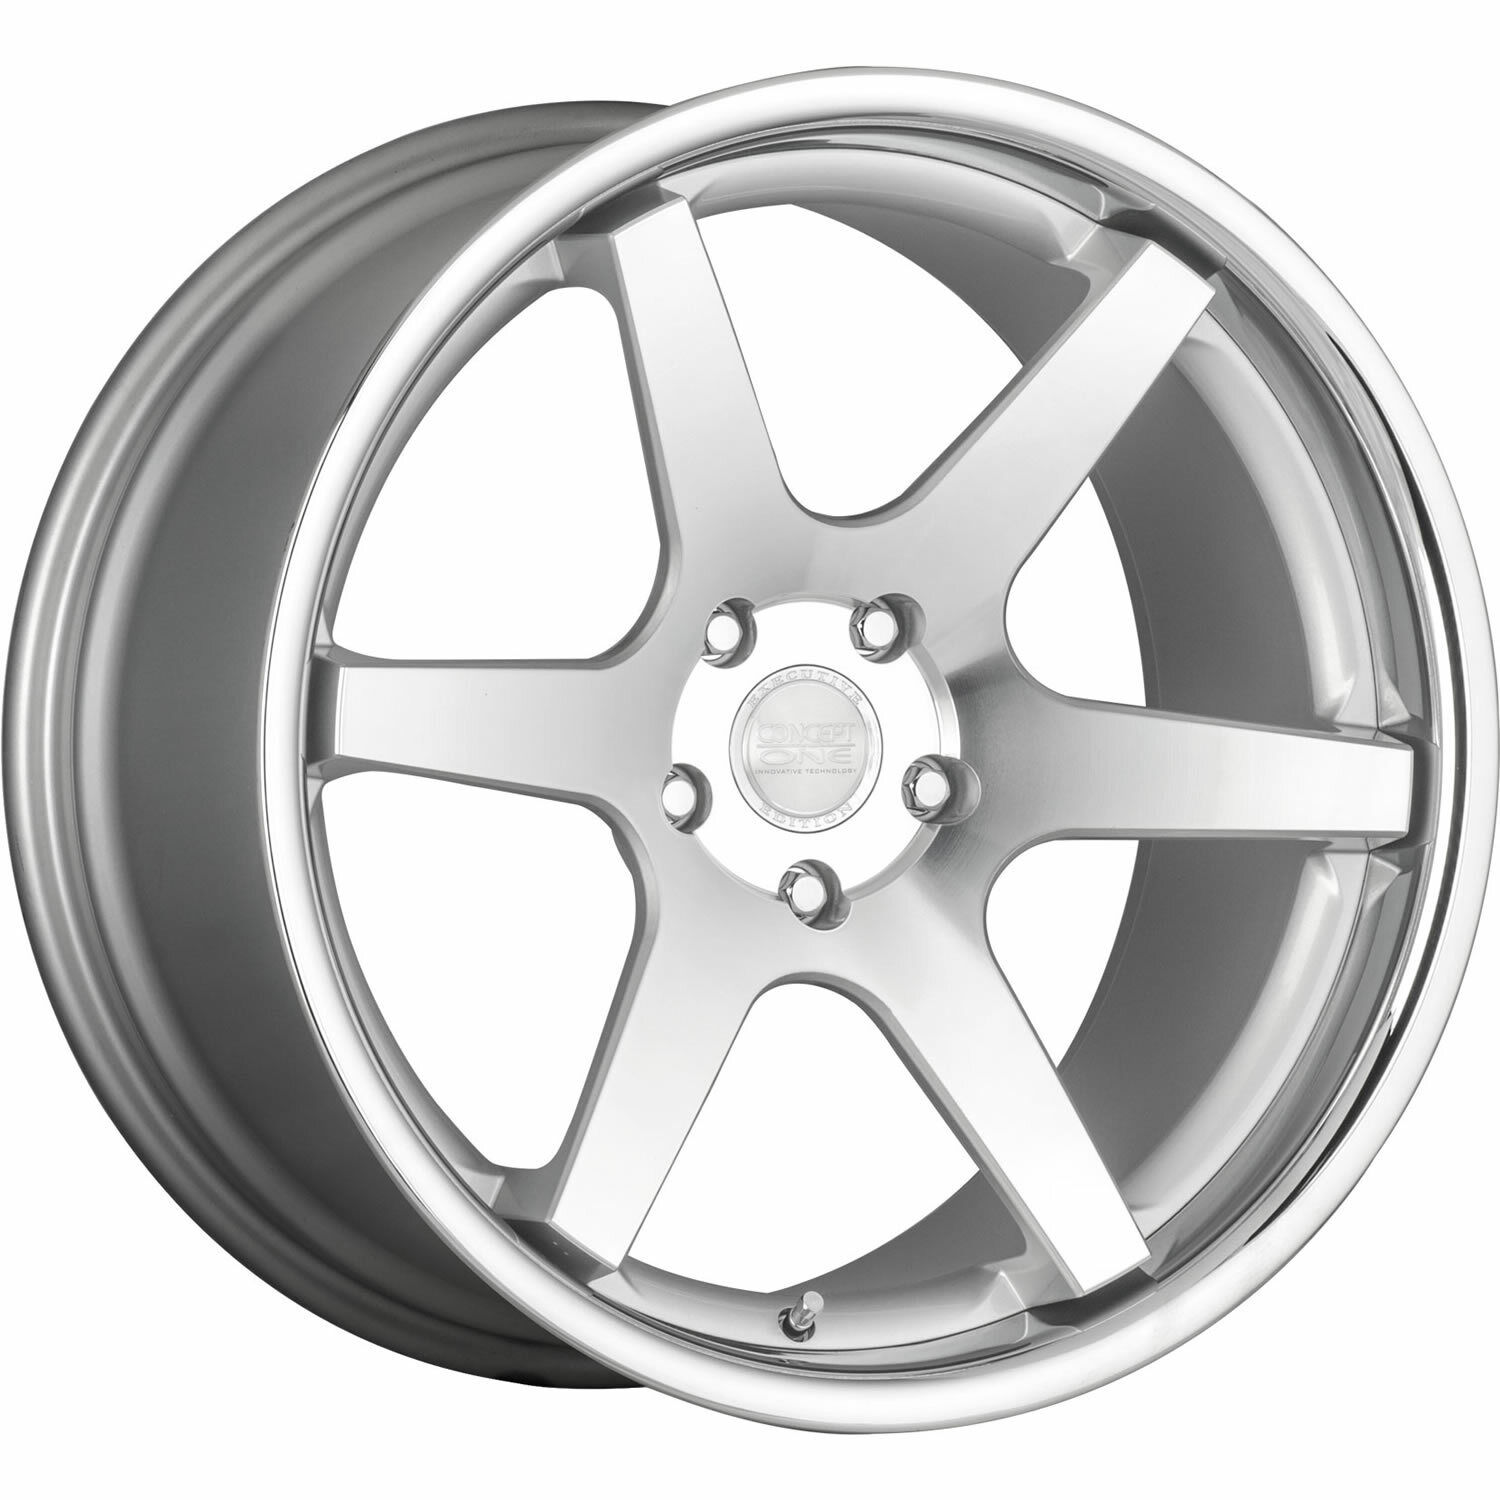 22x9.5 Concept One CS6.0 6x135 35 Silver Machined Wheels Rims Set(4)